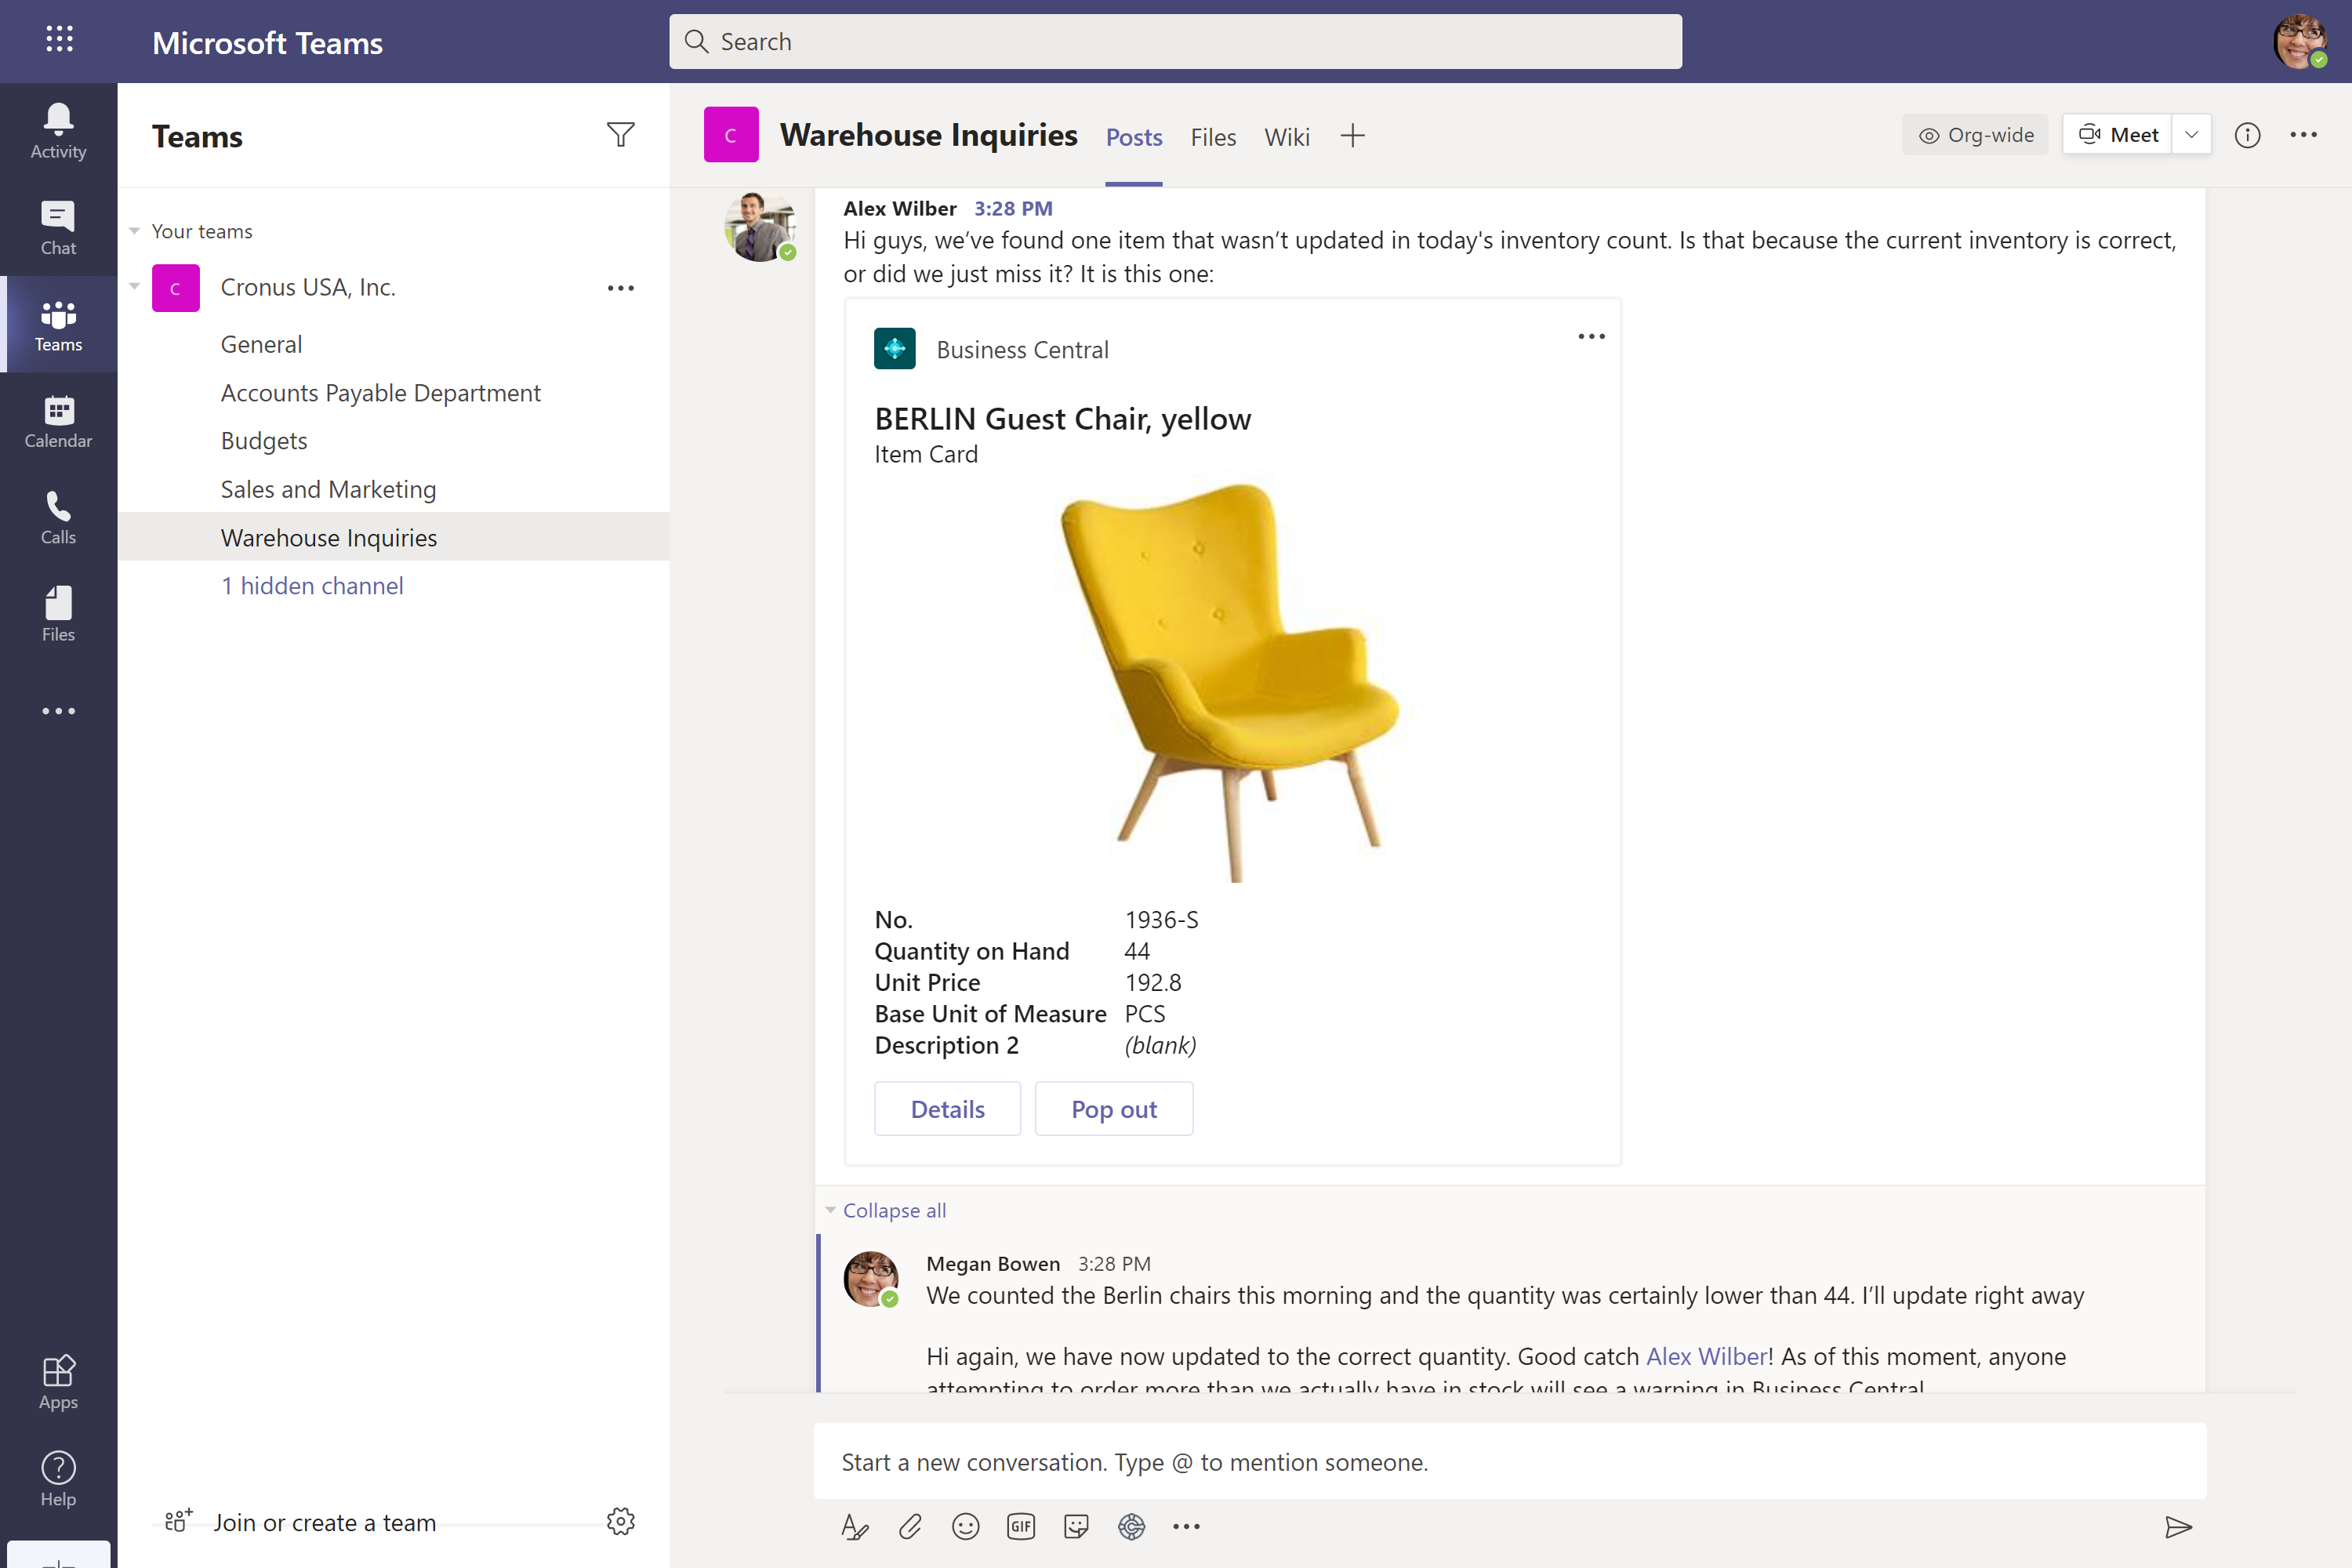 Samtale mellom medarbeidere i Microsoft Teams med forretningsdata som samtaleemne